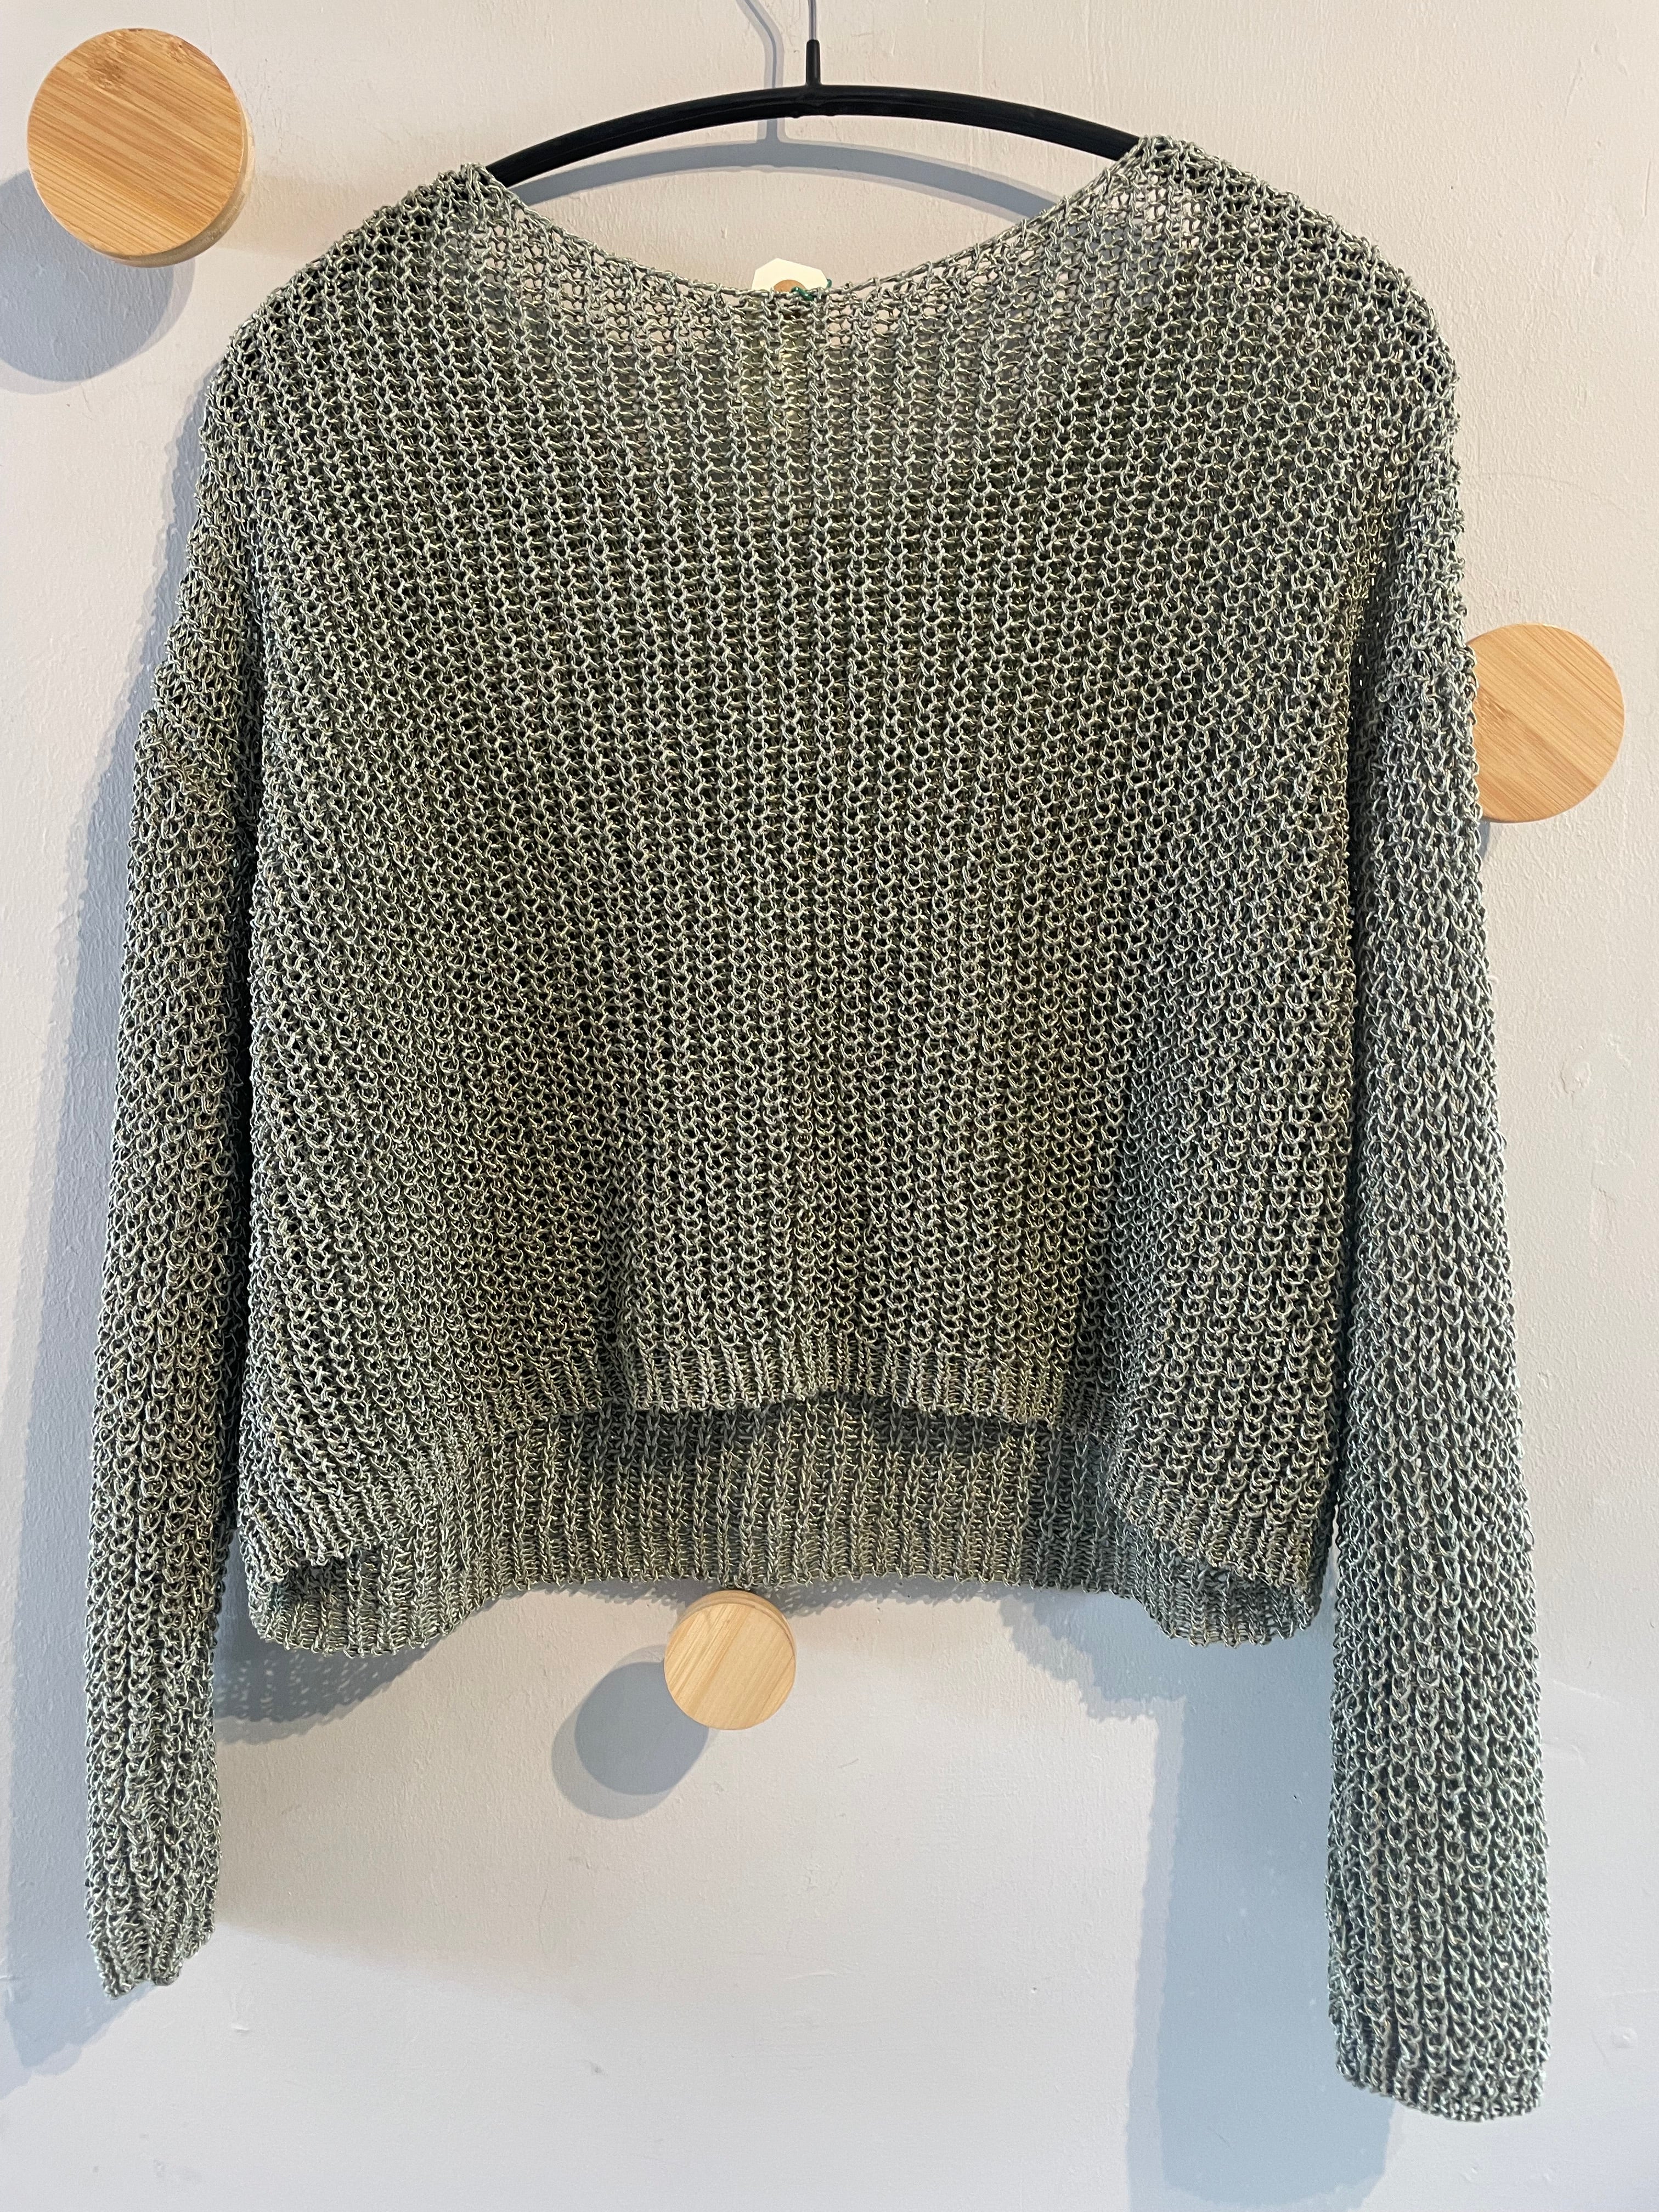 No brand - Sweater - Size: M